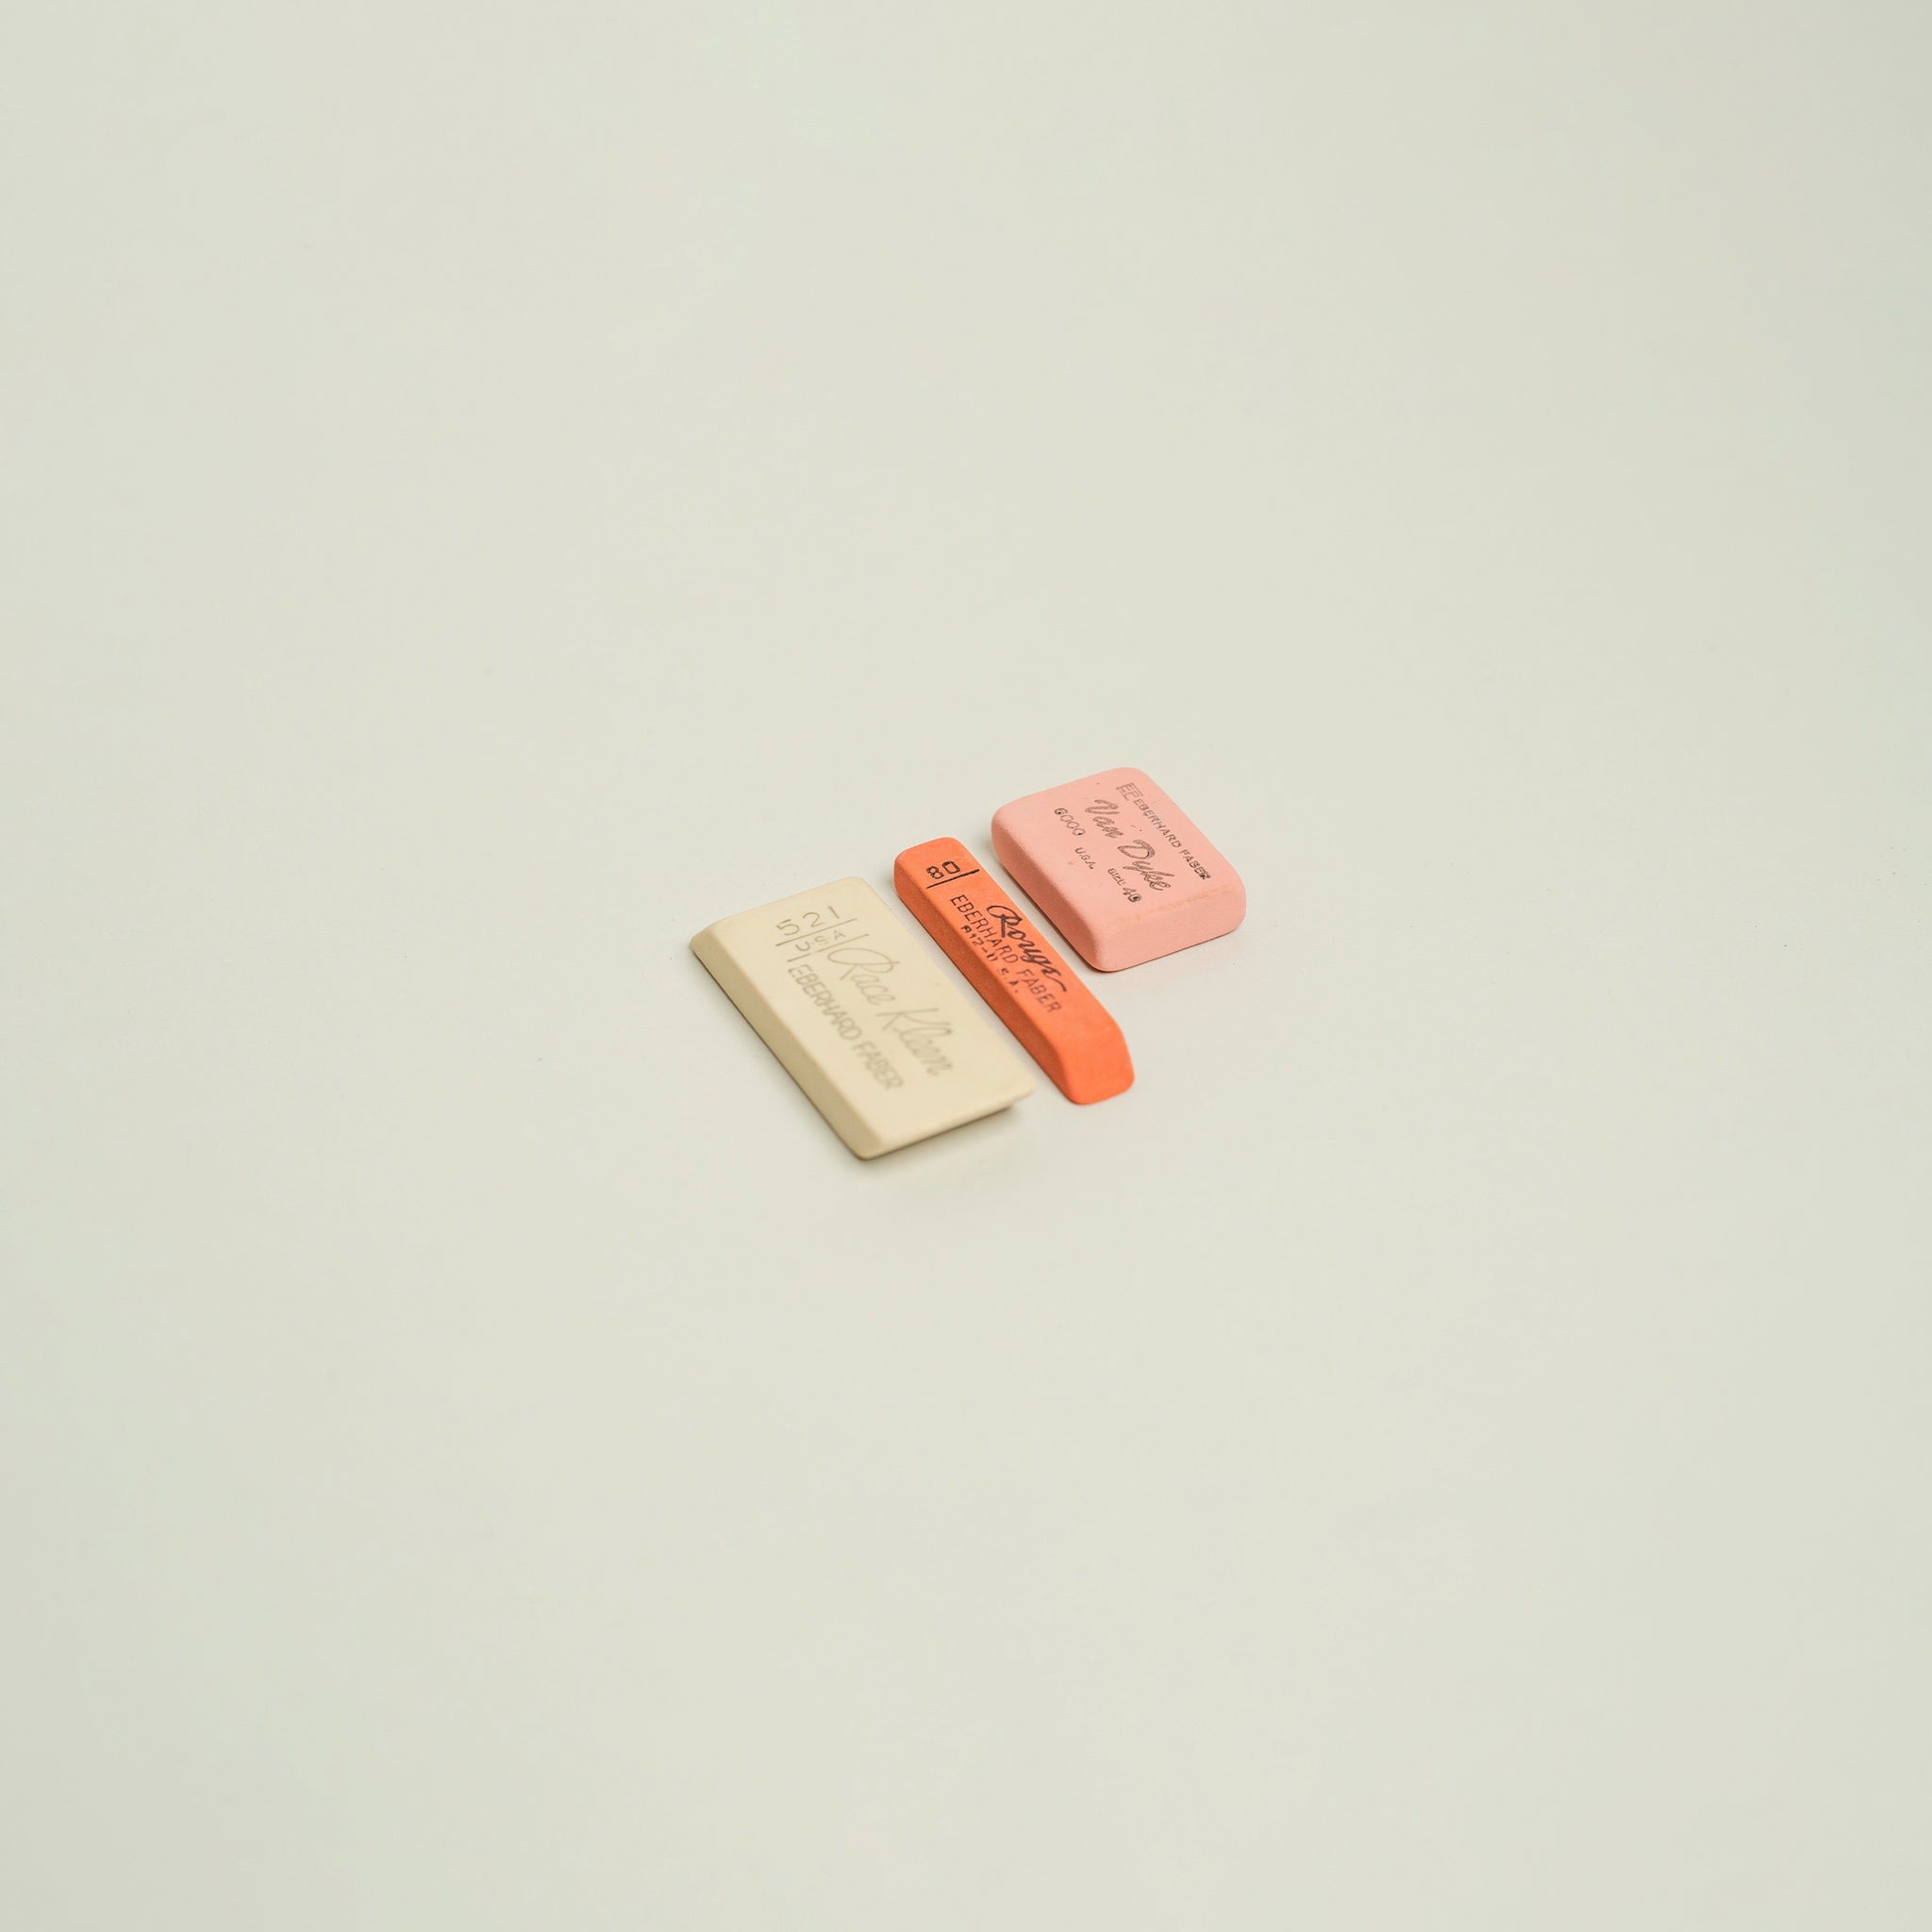 Eraser Pick and Mix